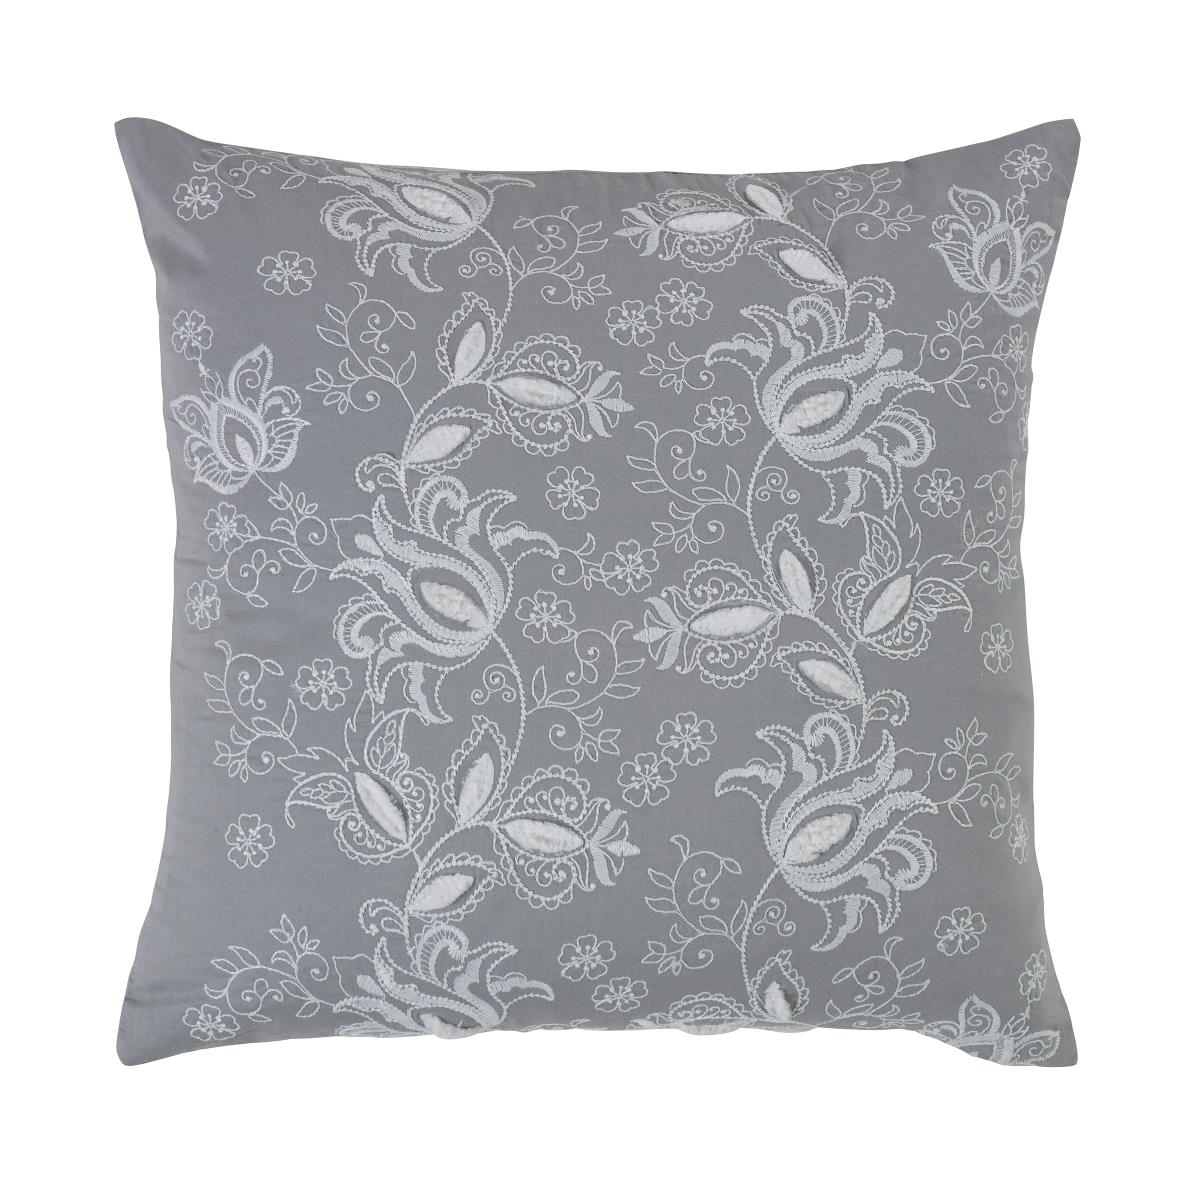 Y00361 Decorative Embroidered Pillow - Vista Grey